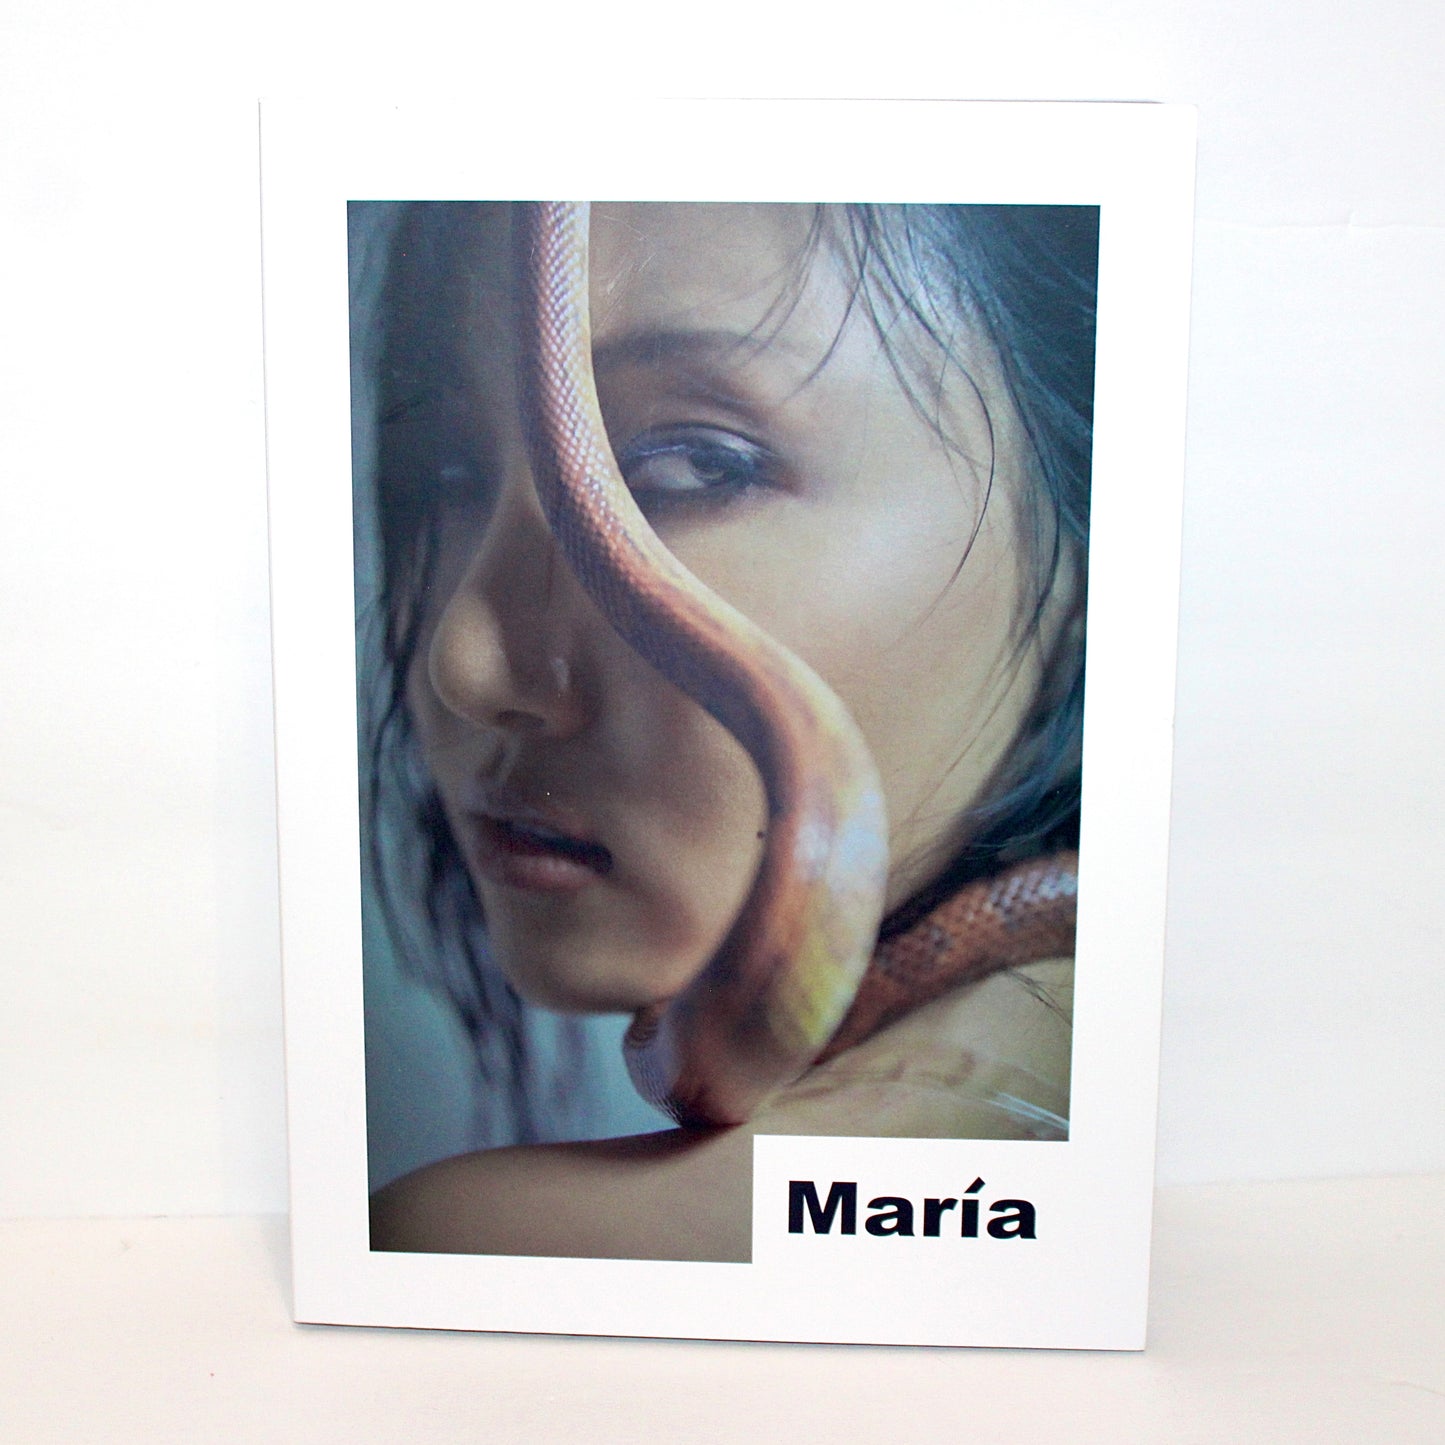 HWASA 1st Mini Album: Maria